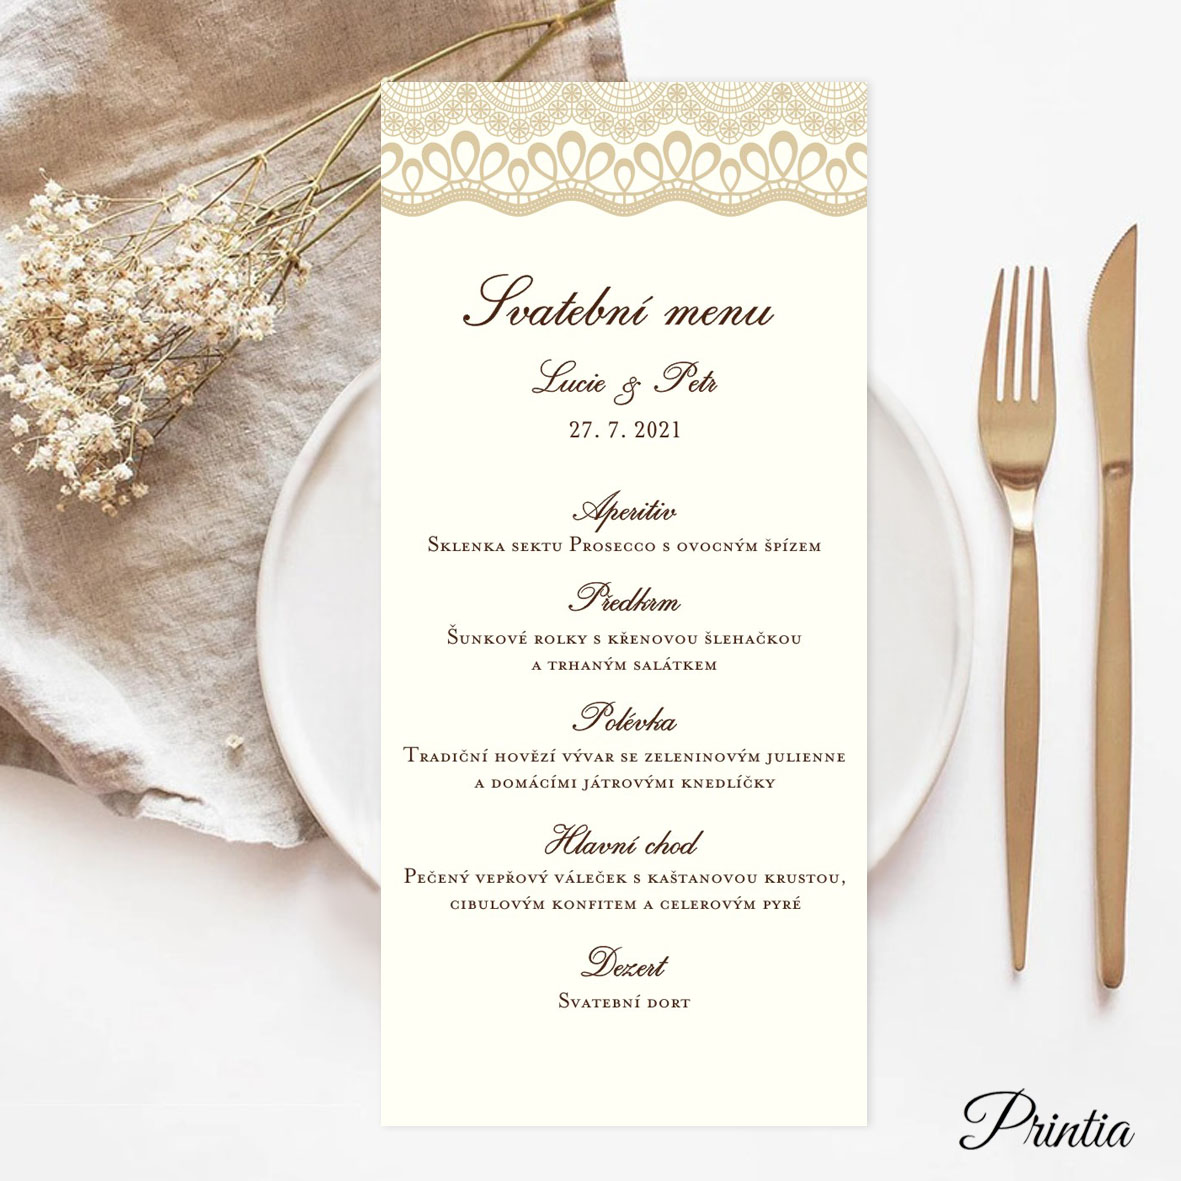 Wedding menu with lace motif